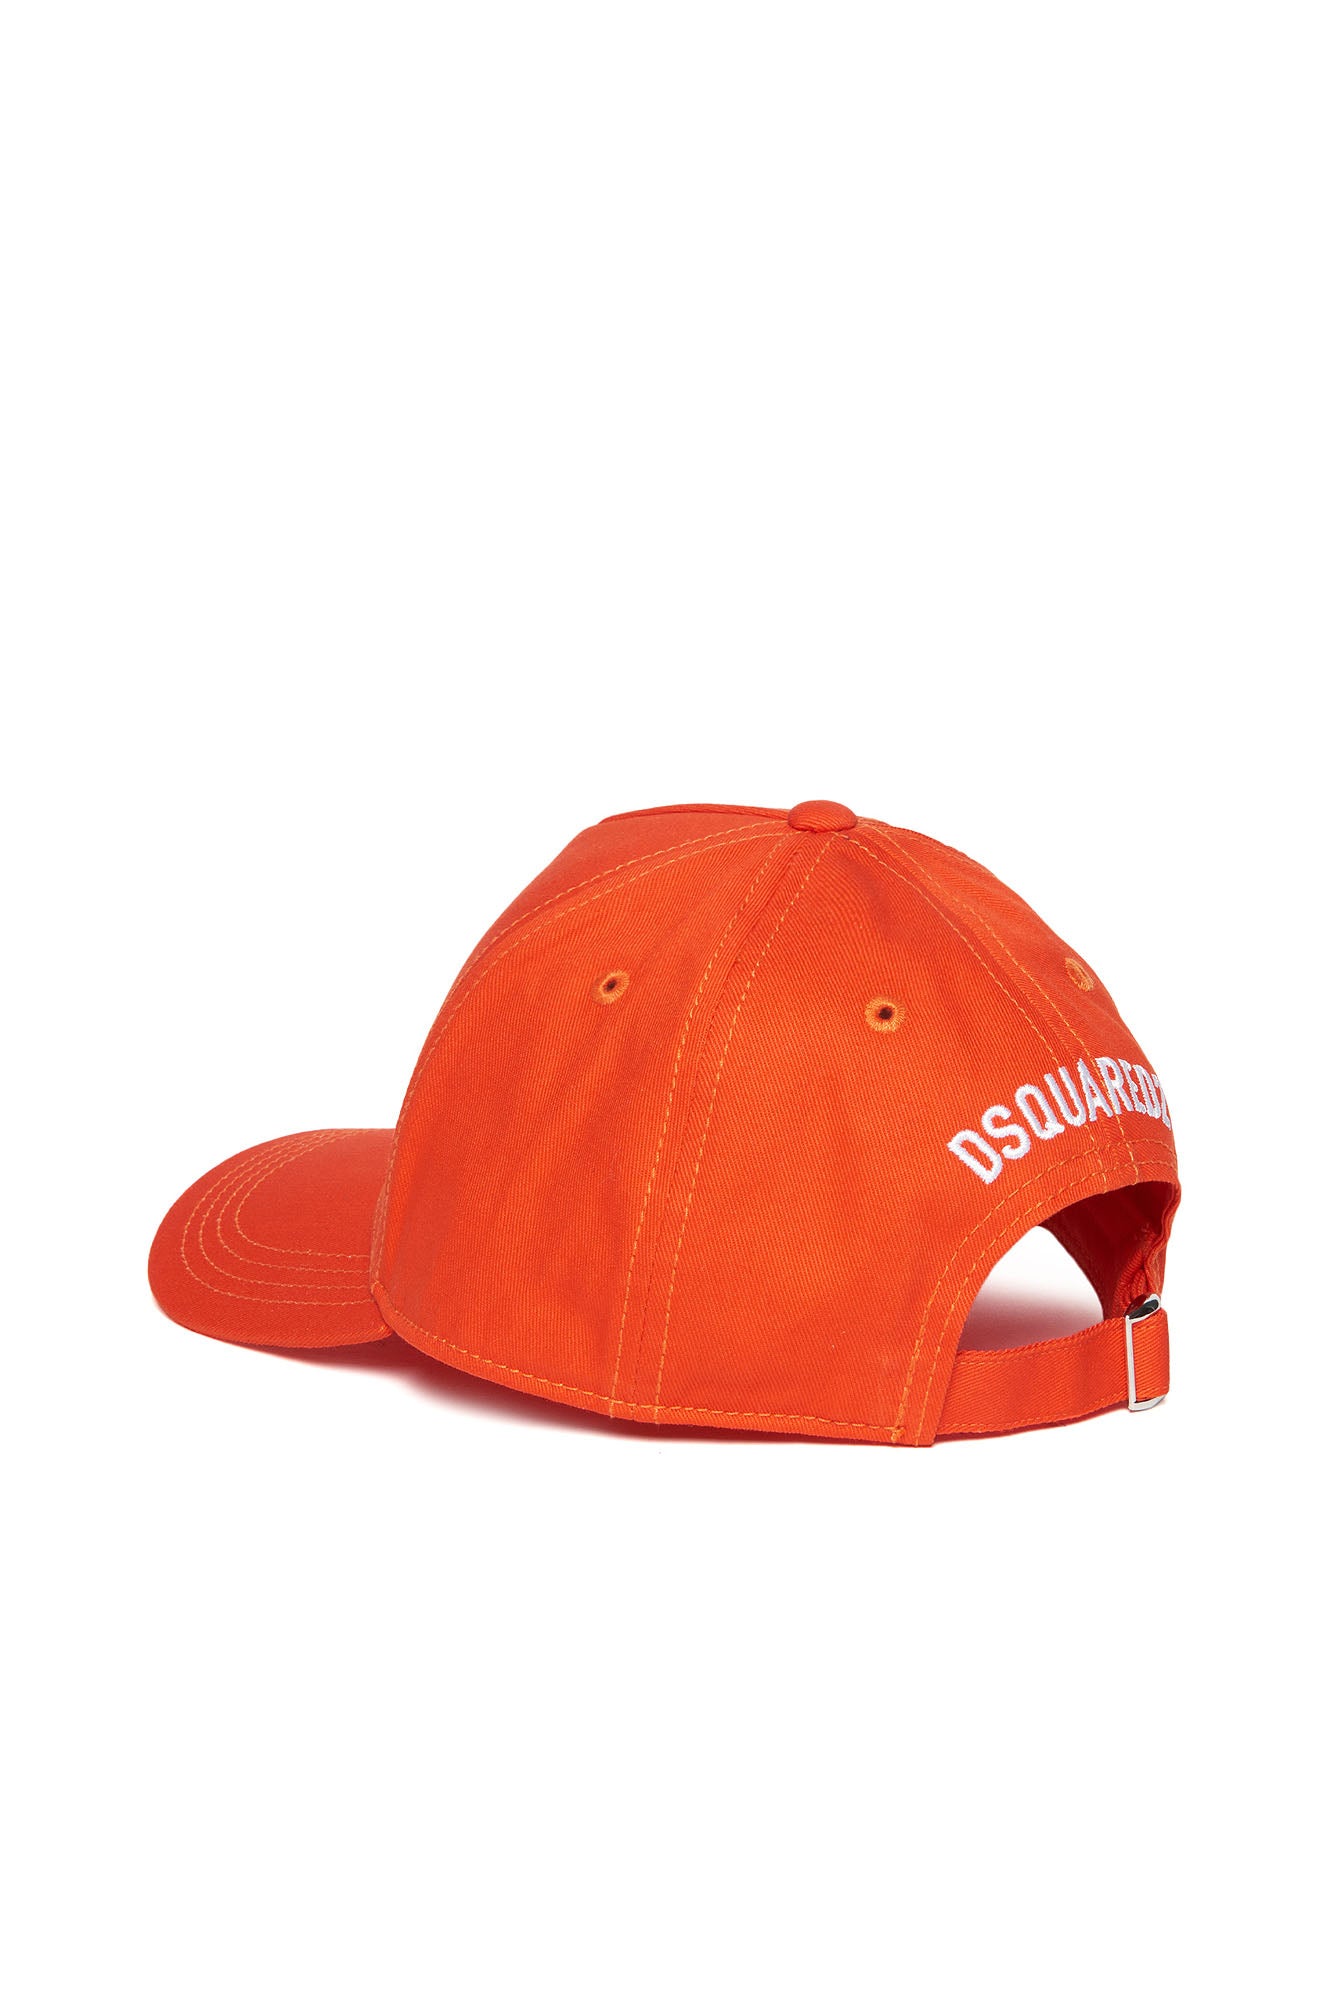 DSQUARED Cappello con Visiera Unisex Bambino DQ1006-D00YT Flame Orange